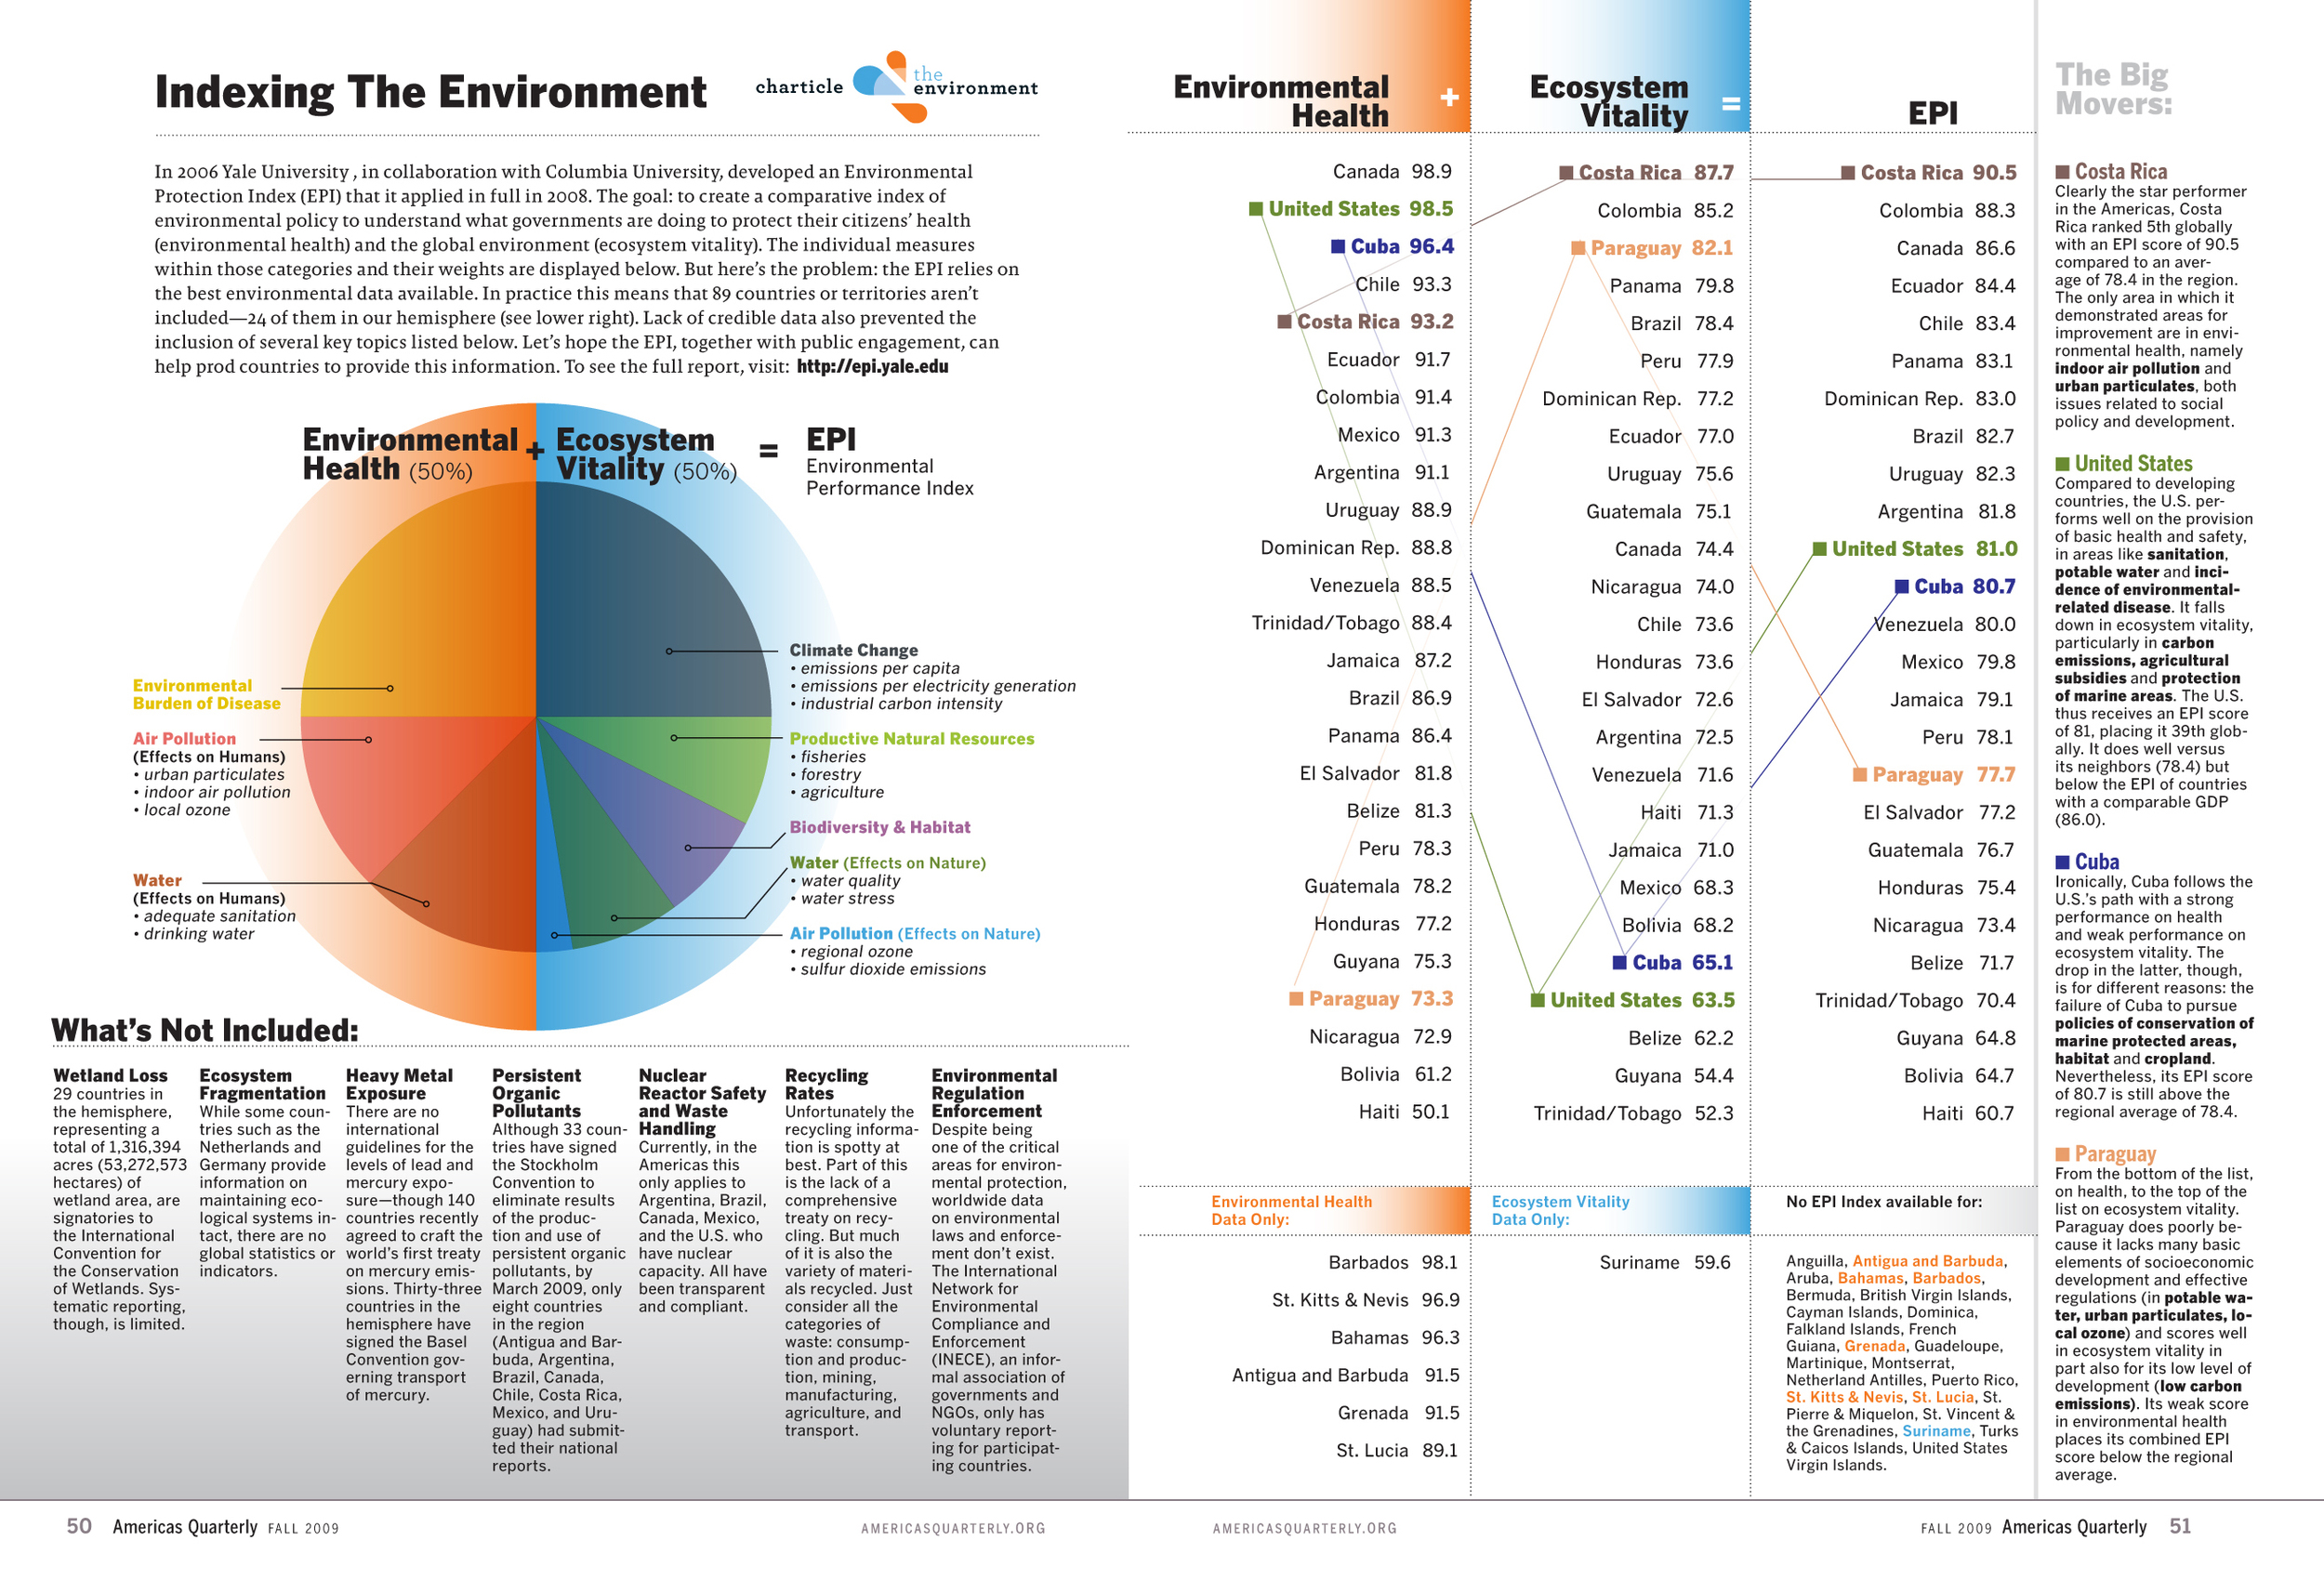 Environment Infographic